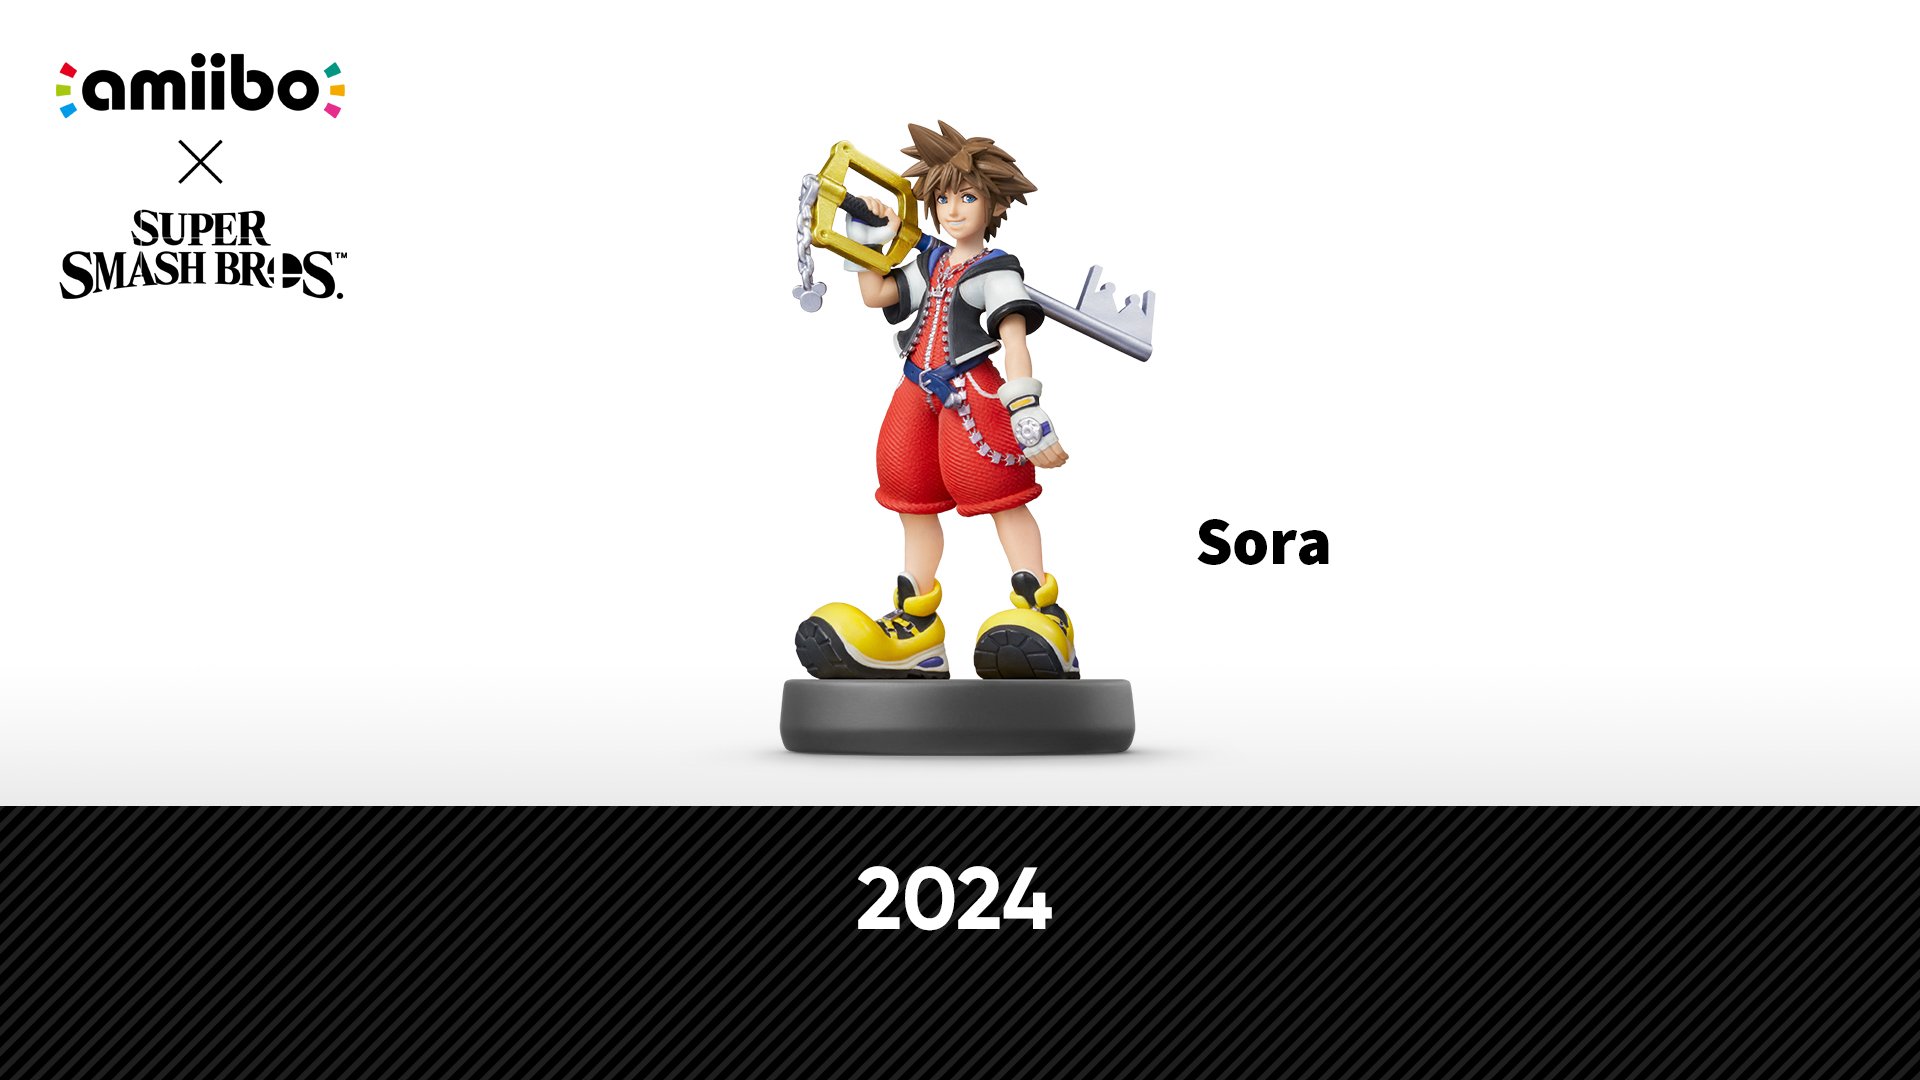 The final Smash Bros amiibo, Kingdom Hearts' Sora, is coming next